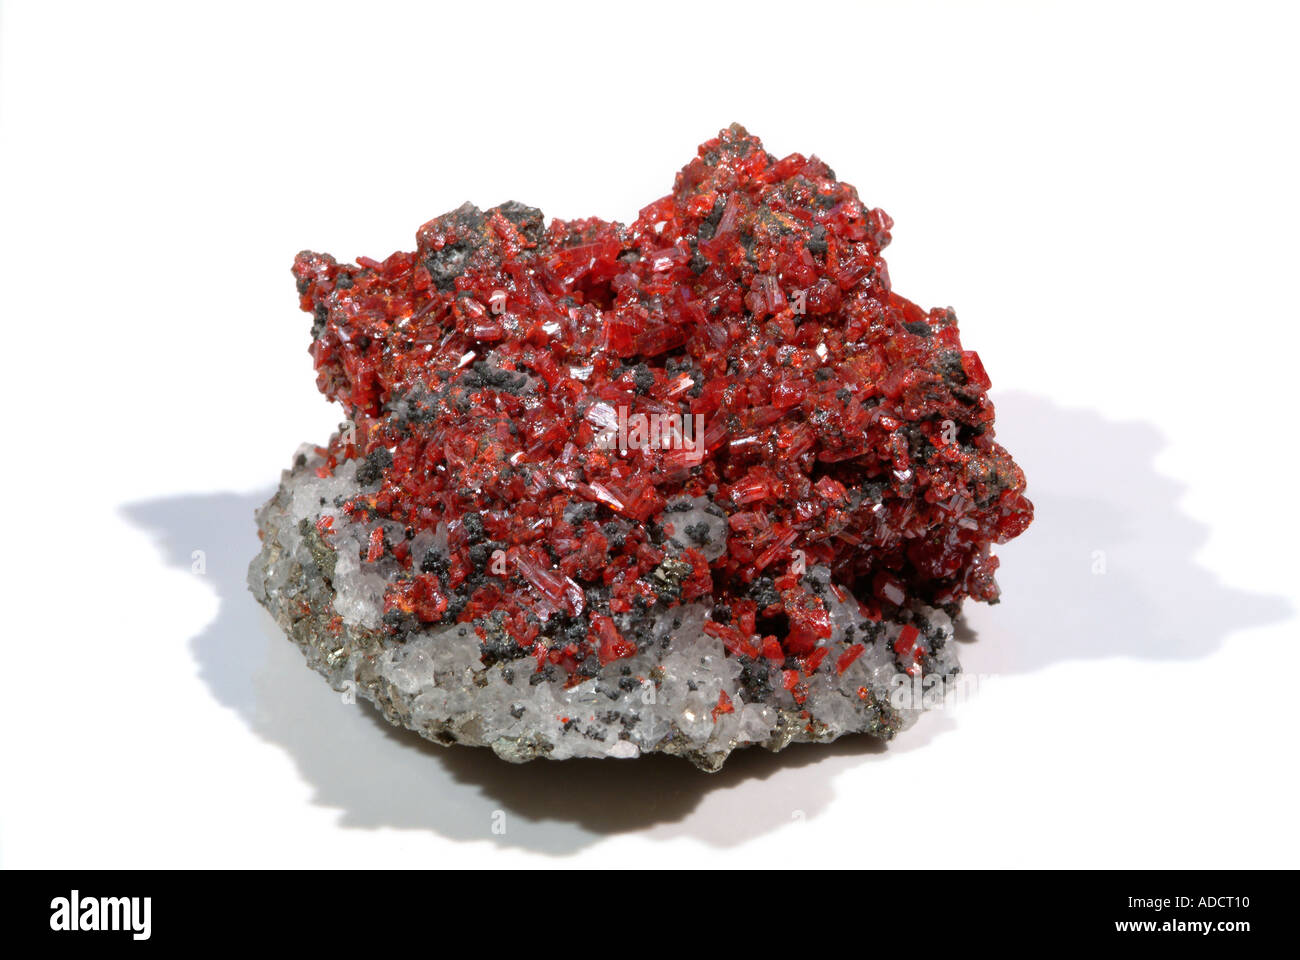 Mineral Realgar, Ruby red crystals covering a quartz and pyrite matrix,  Mina Baia Sprie, Baia Mare, Maramures, Romania Stock Photo - Alamy